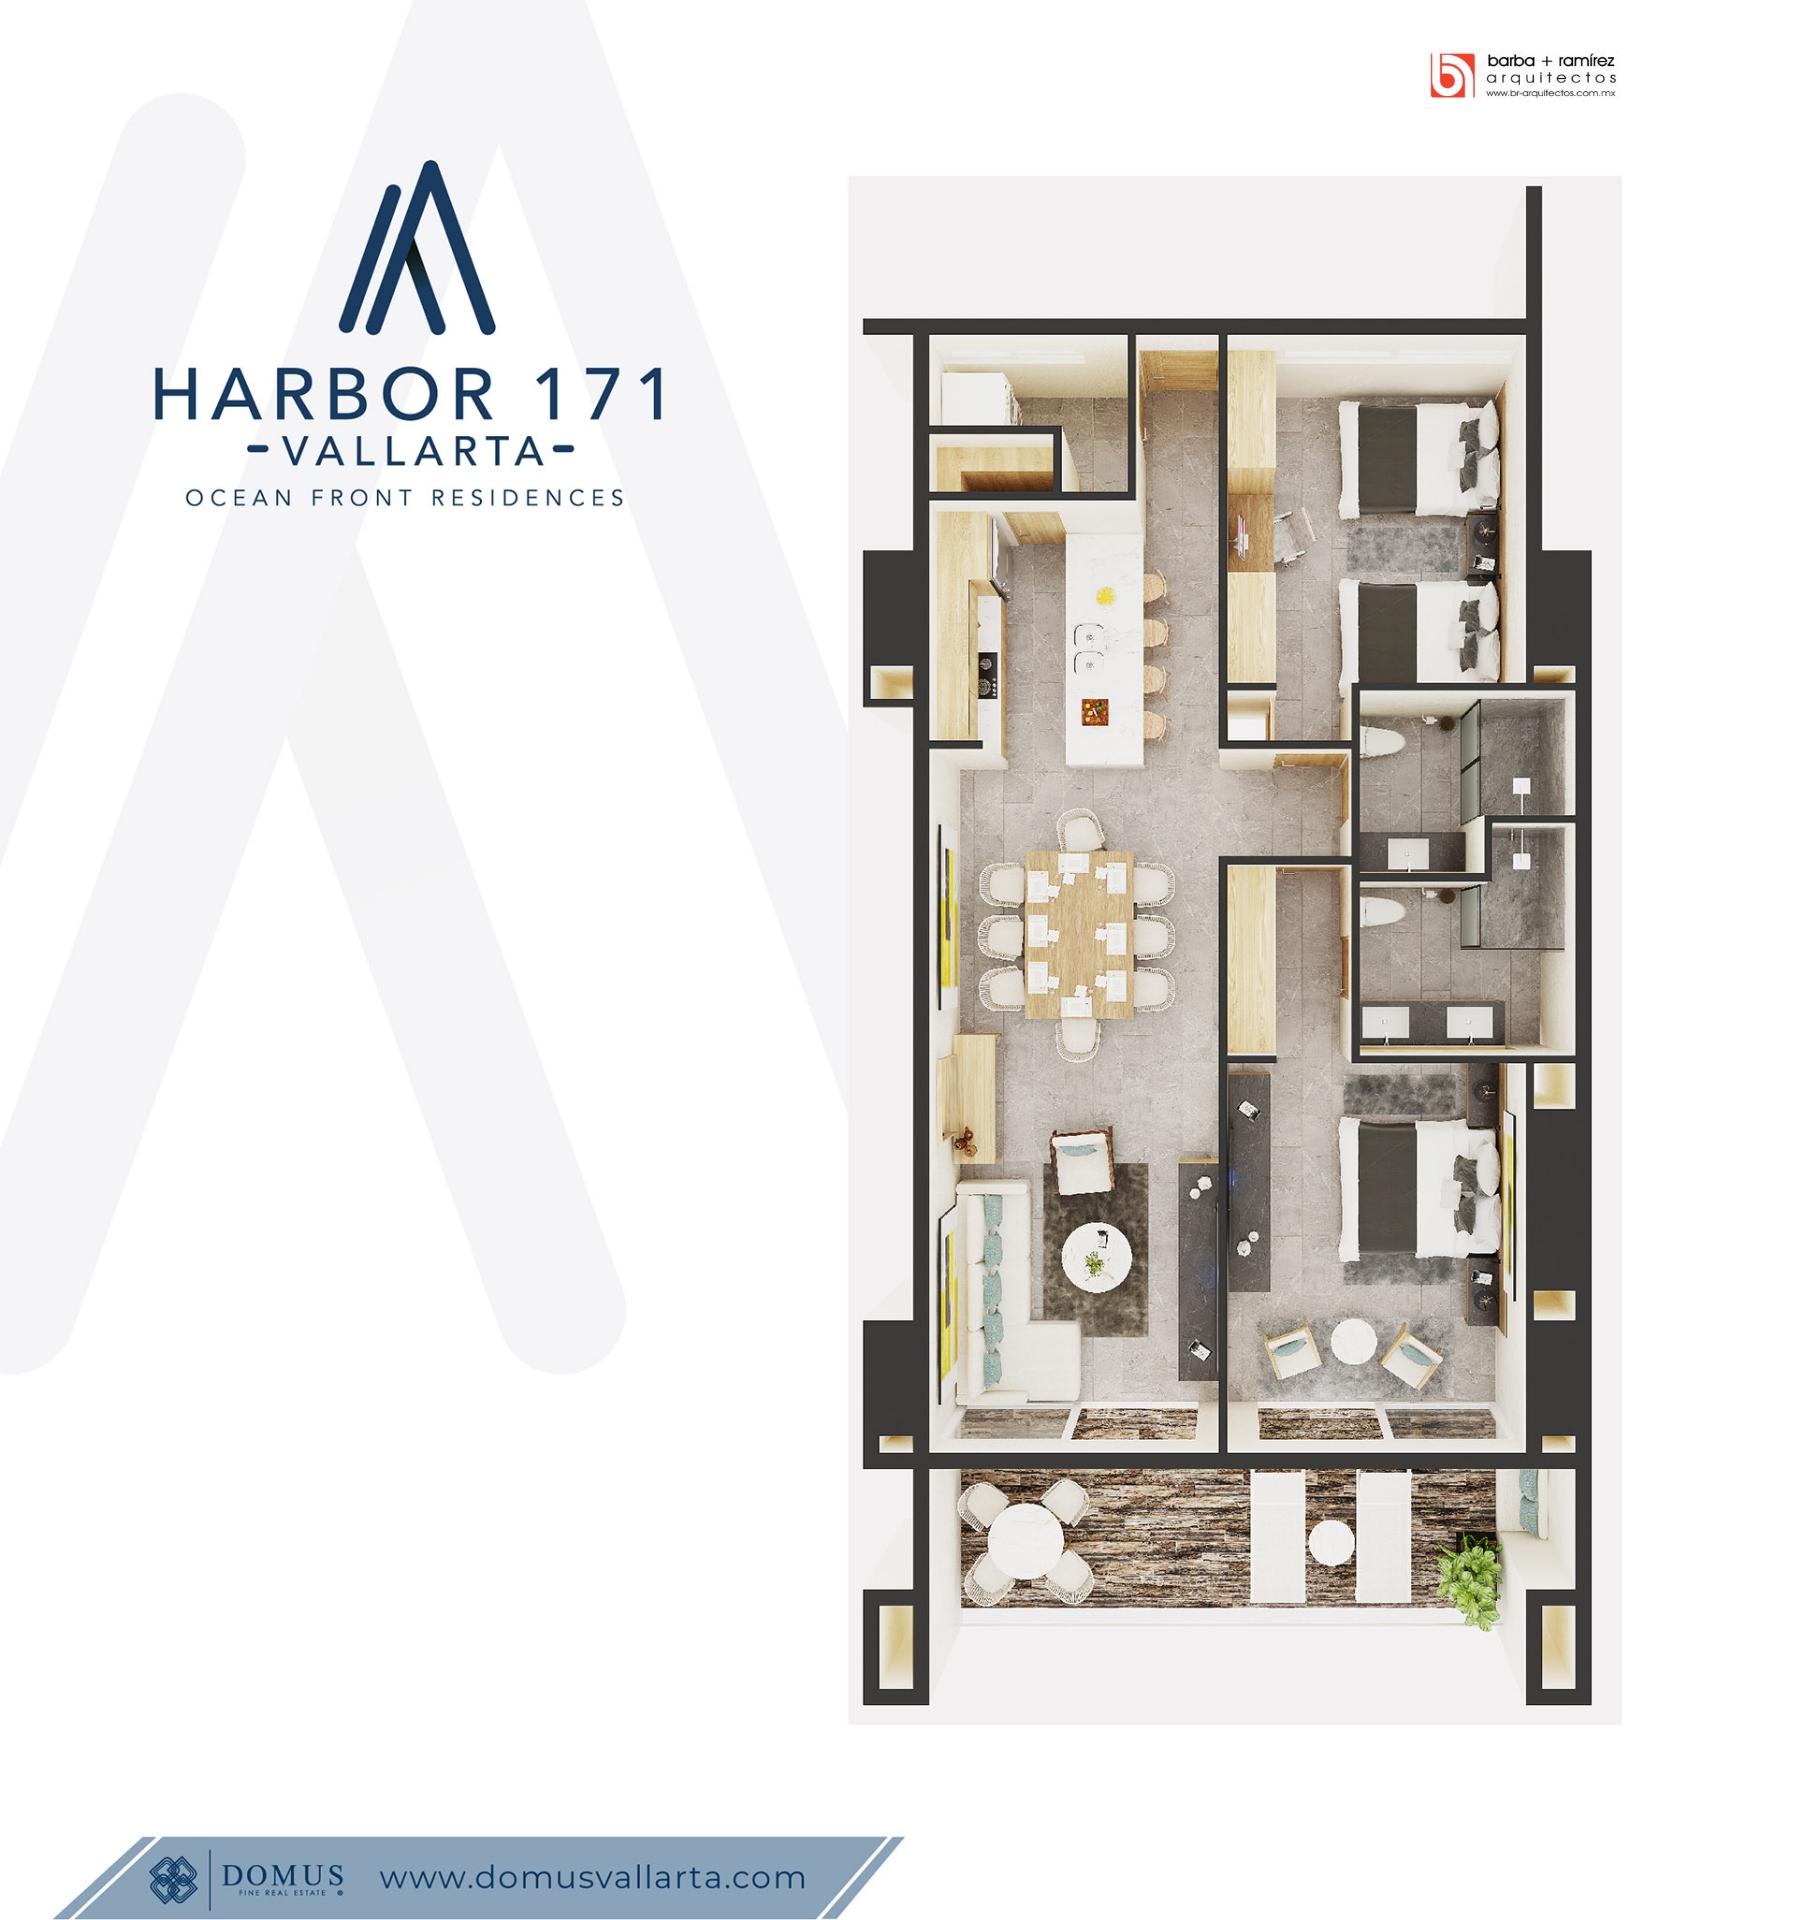 Unit 1206 Blueprint - Harbor 171